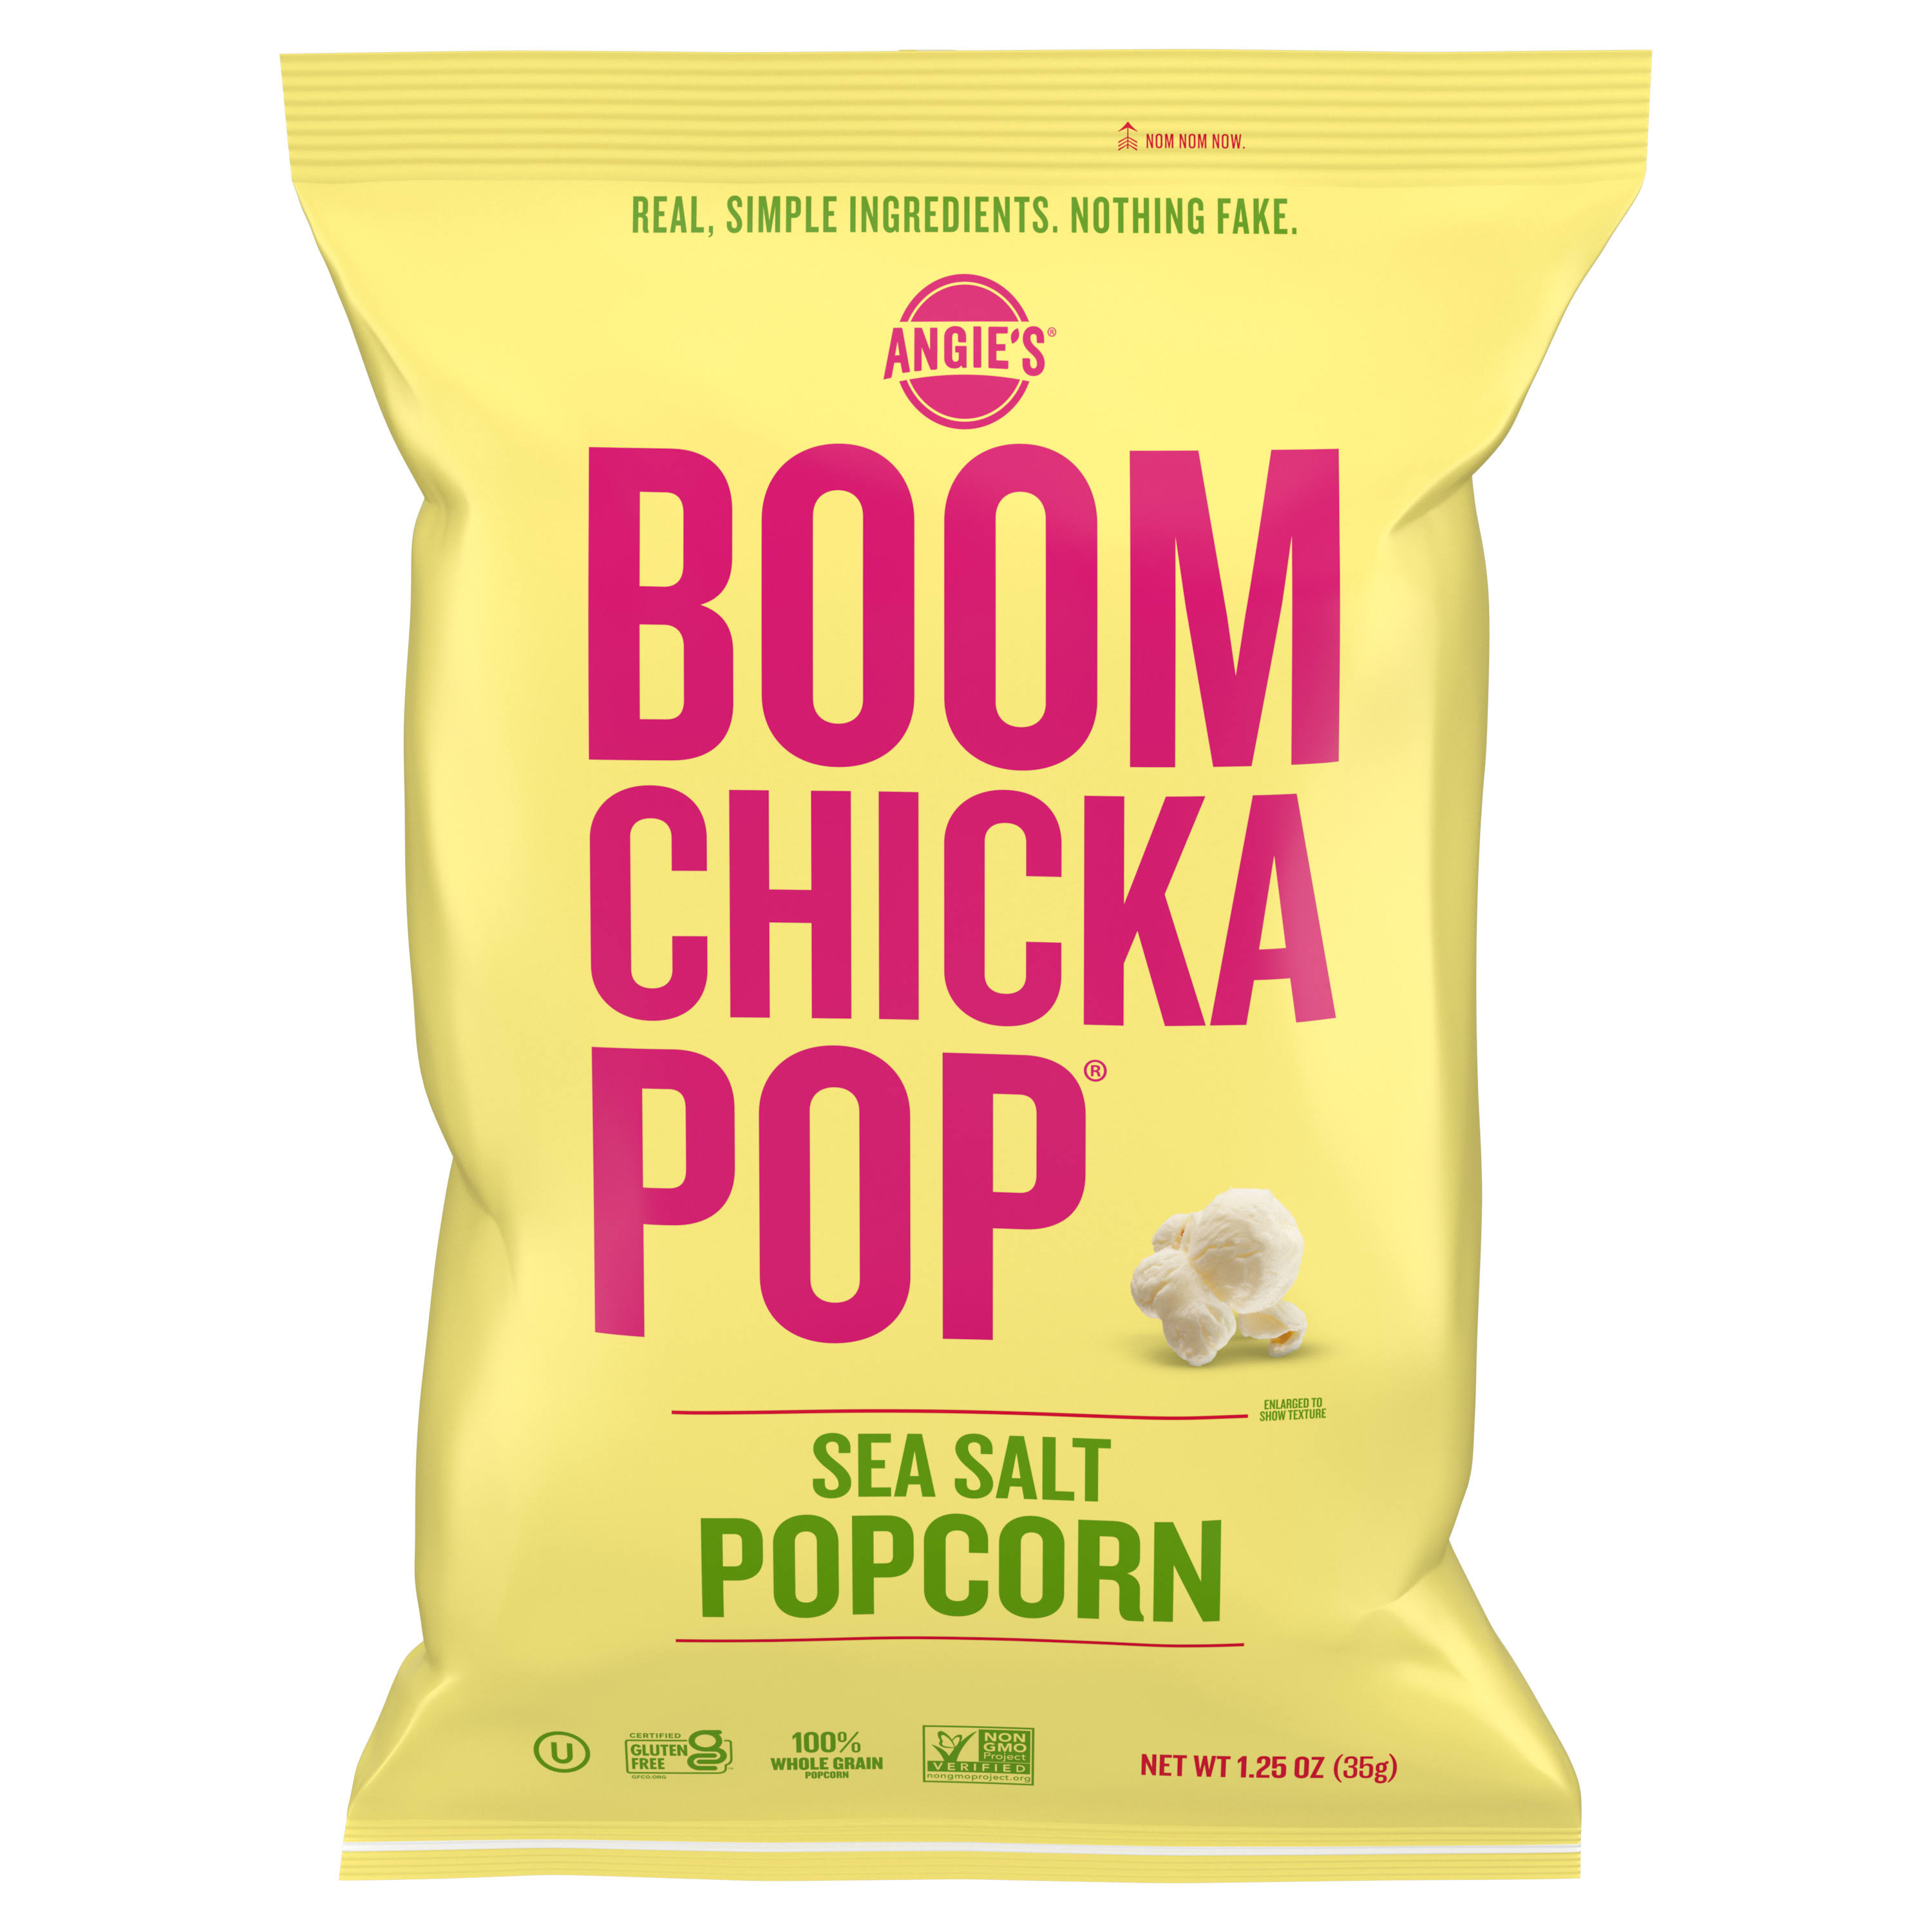 Angie's Boomchickapop Sea Salt Popcorn - 12 pack, 1.25 oz bags